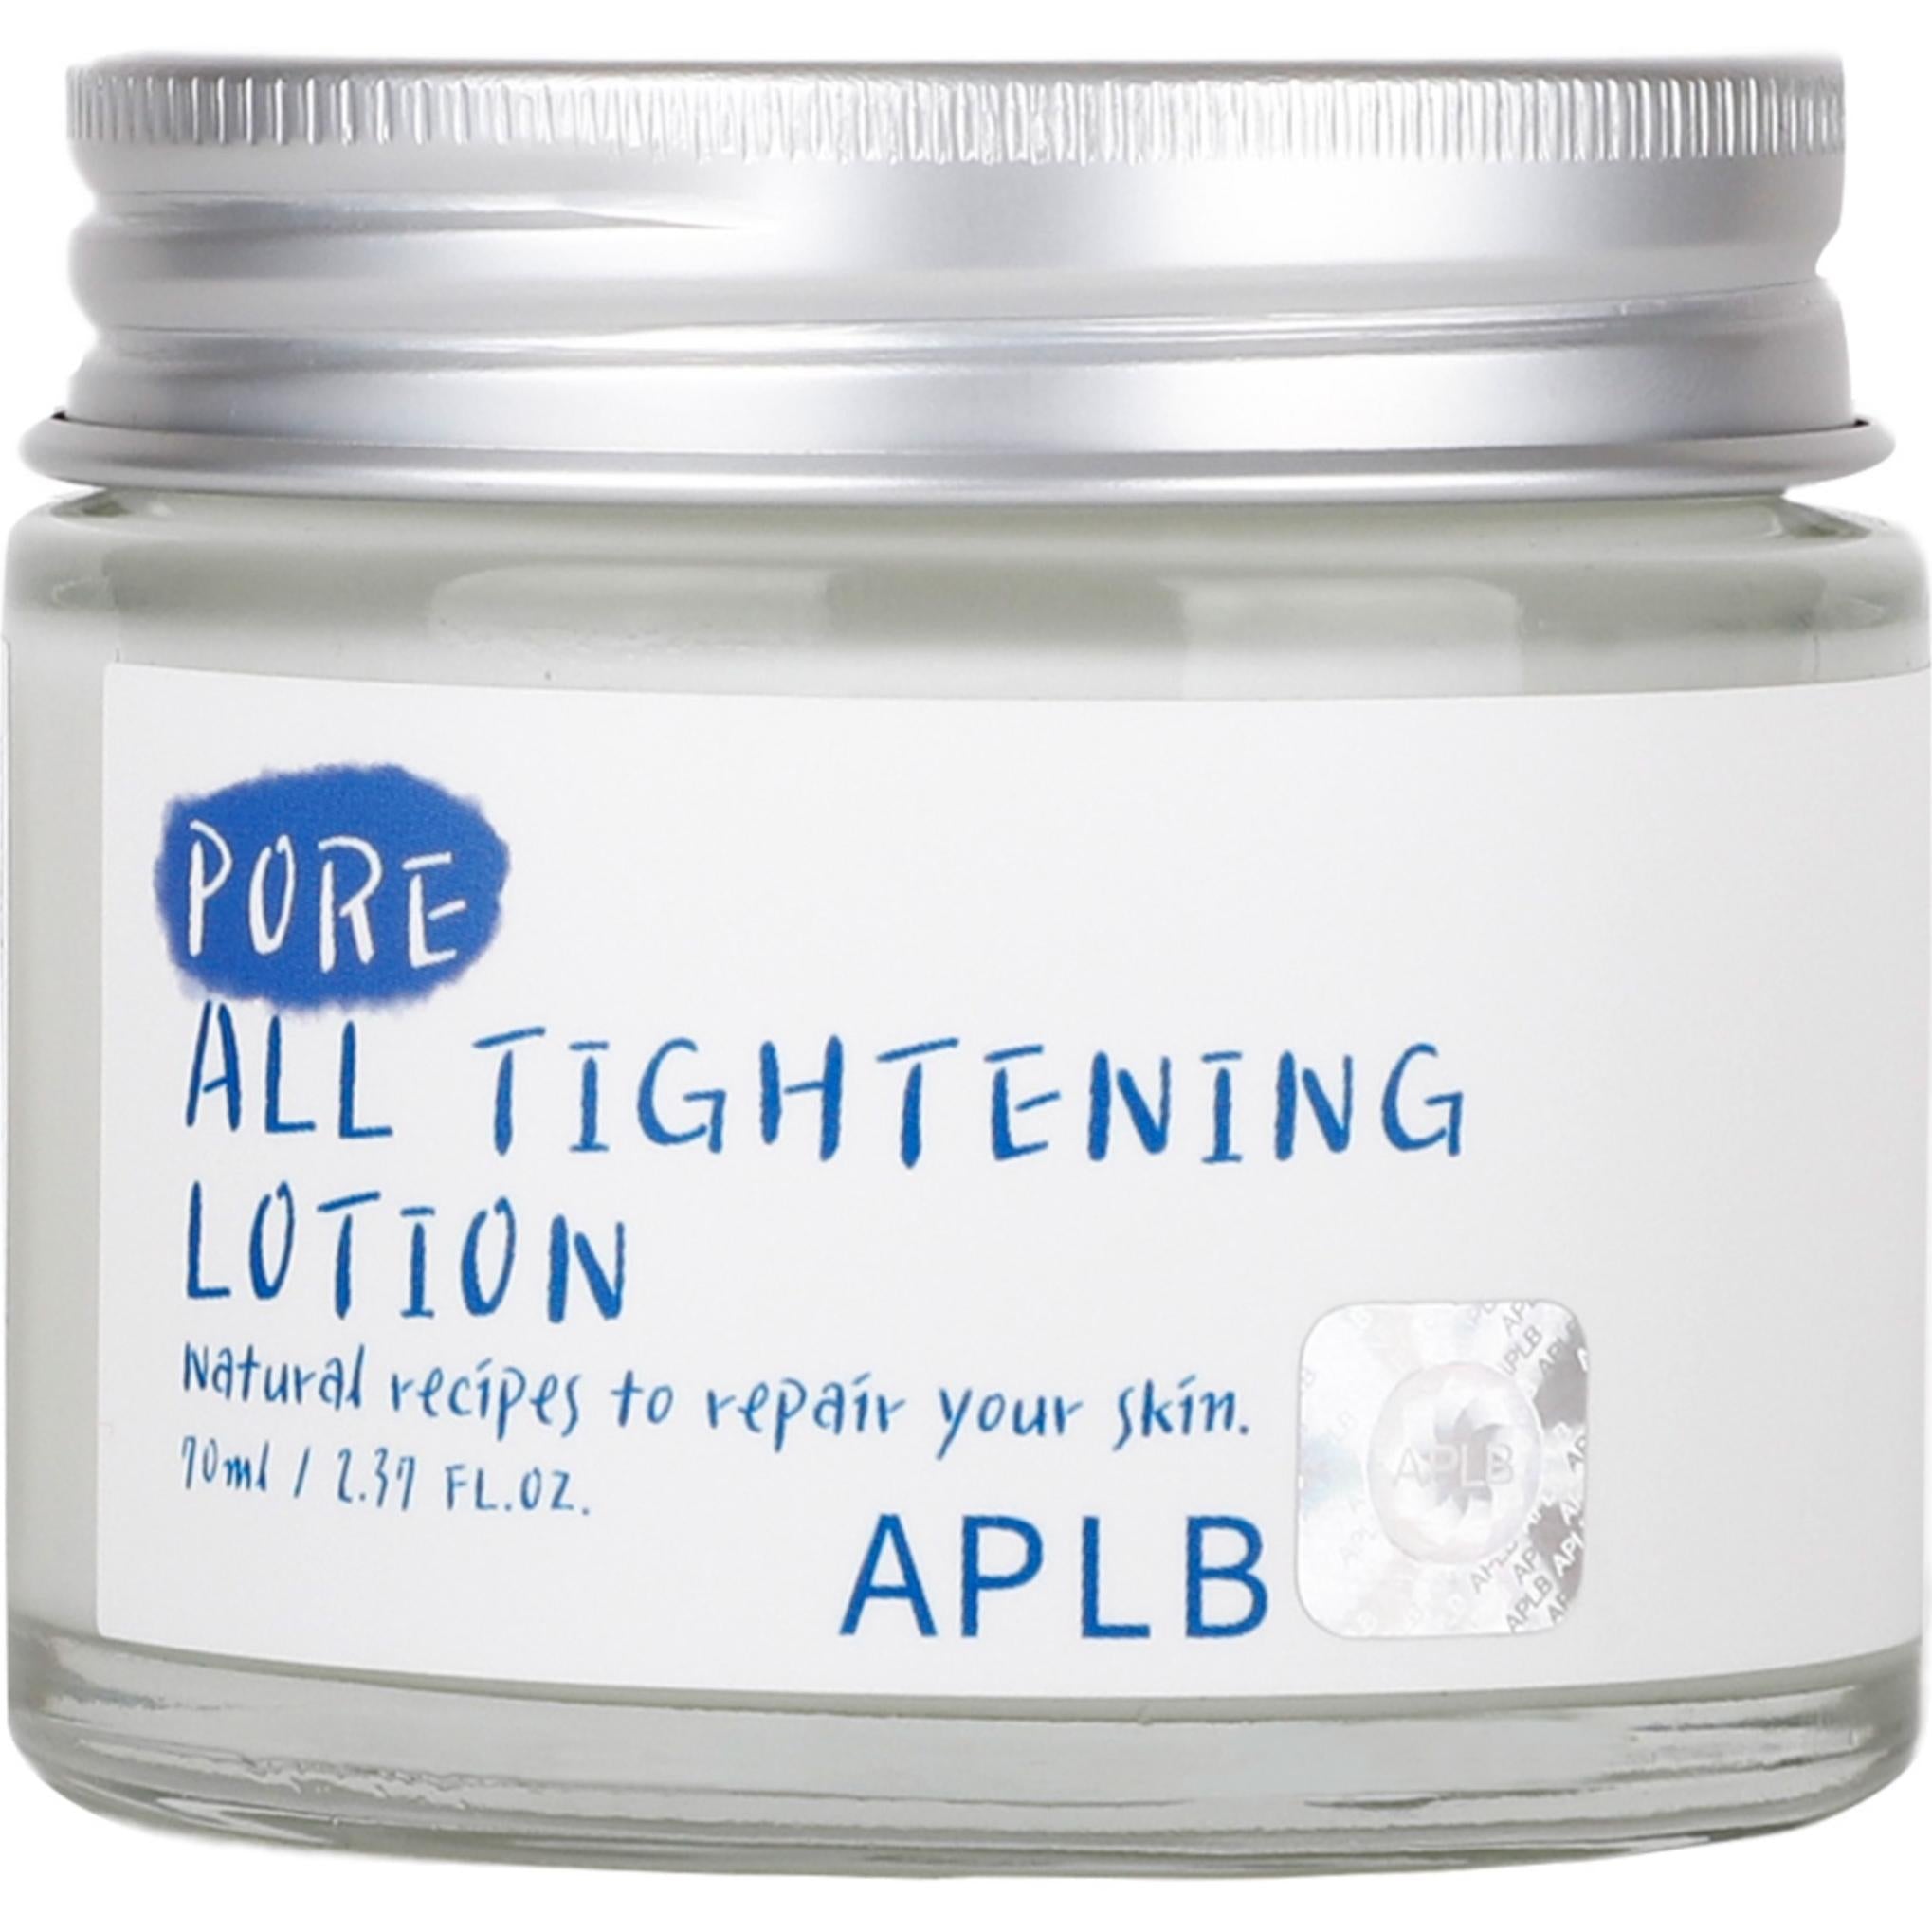 Aple B Pore All Tightening Moisture Lotion